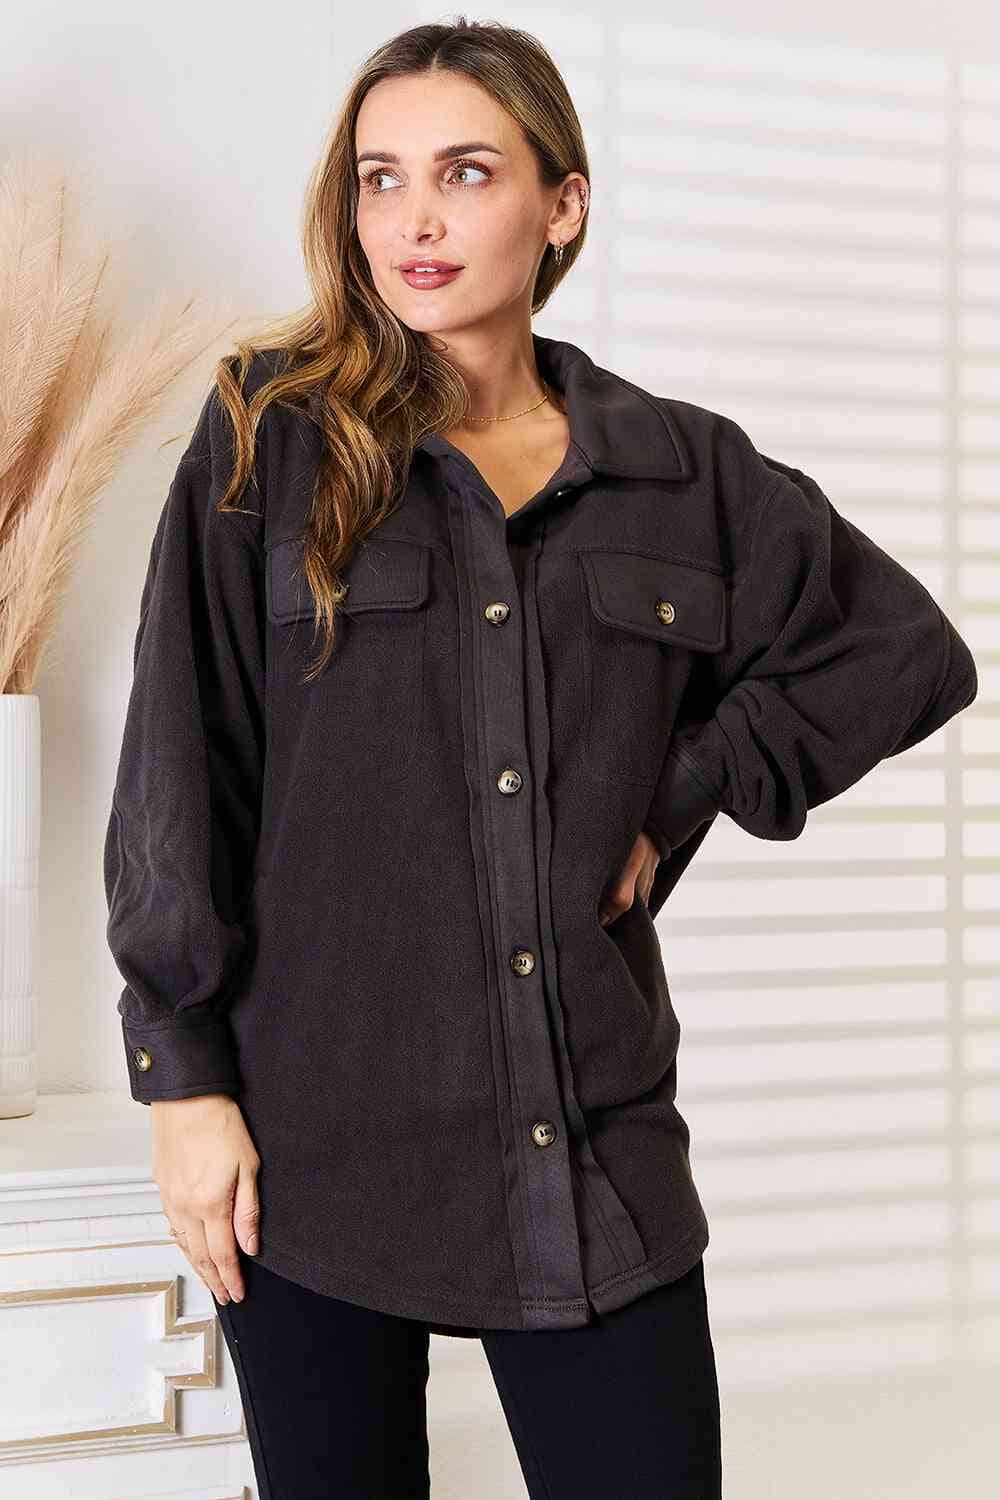 Heimish Charcoal Black Long Sleeve Button Down Shacket Coats & Jackets jehouze 